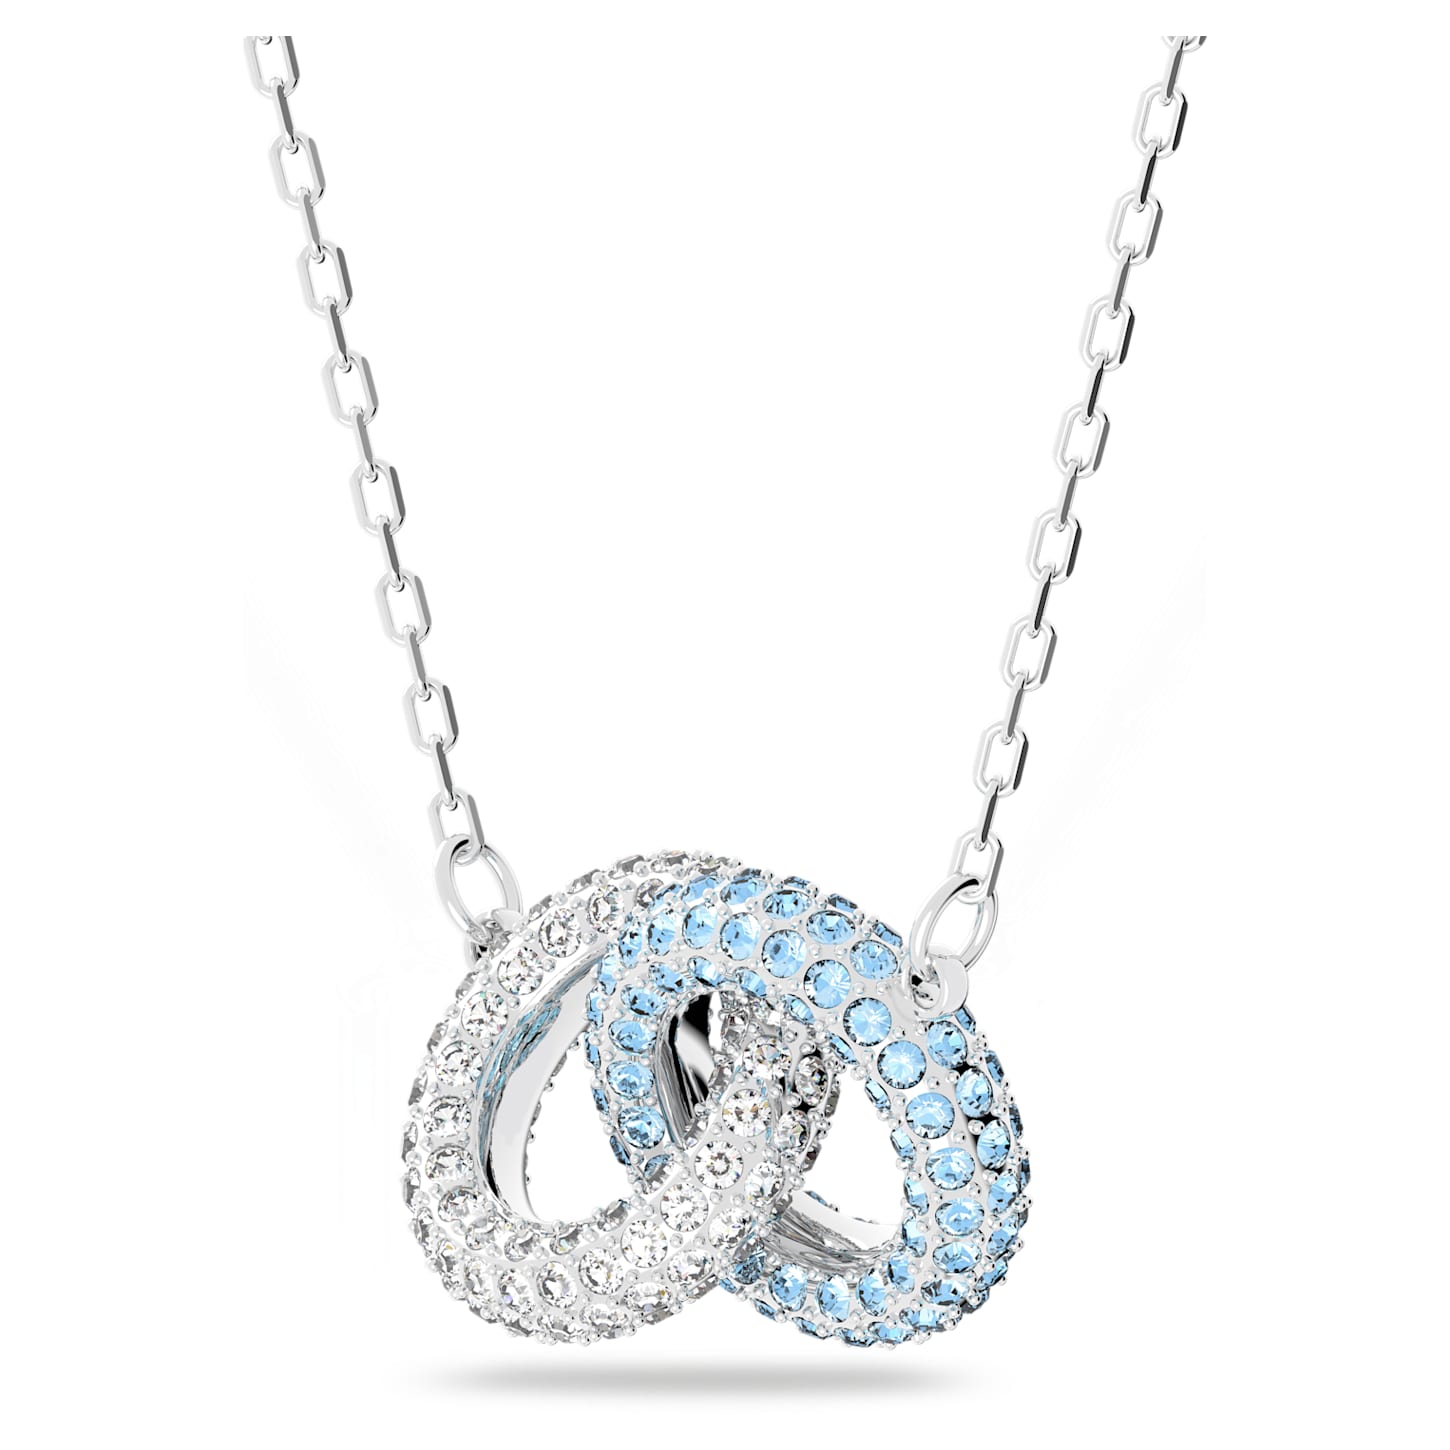 Stone - Blue Silver - Necklace - Swarovski